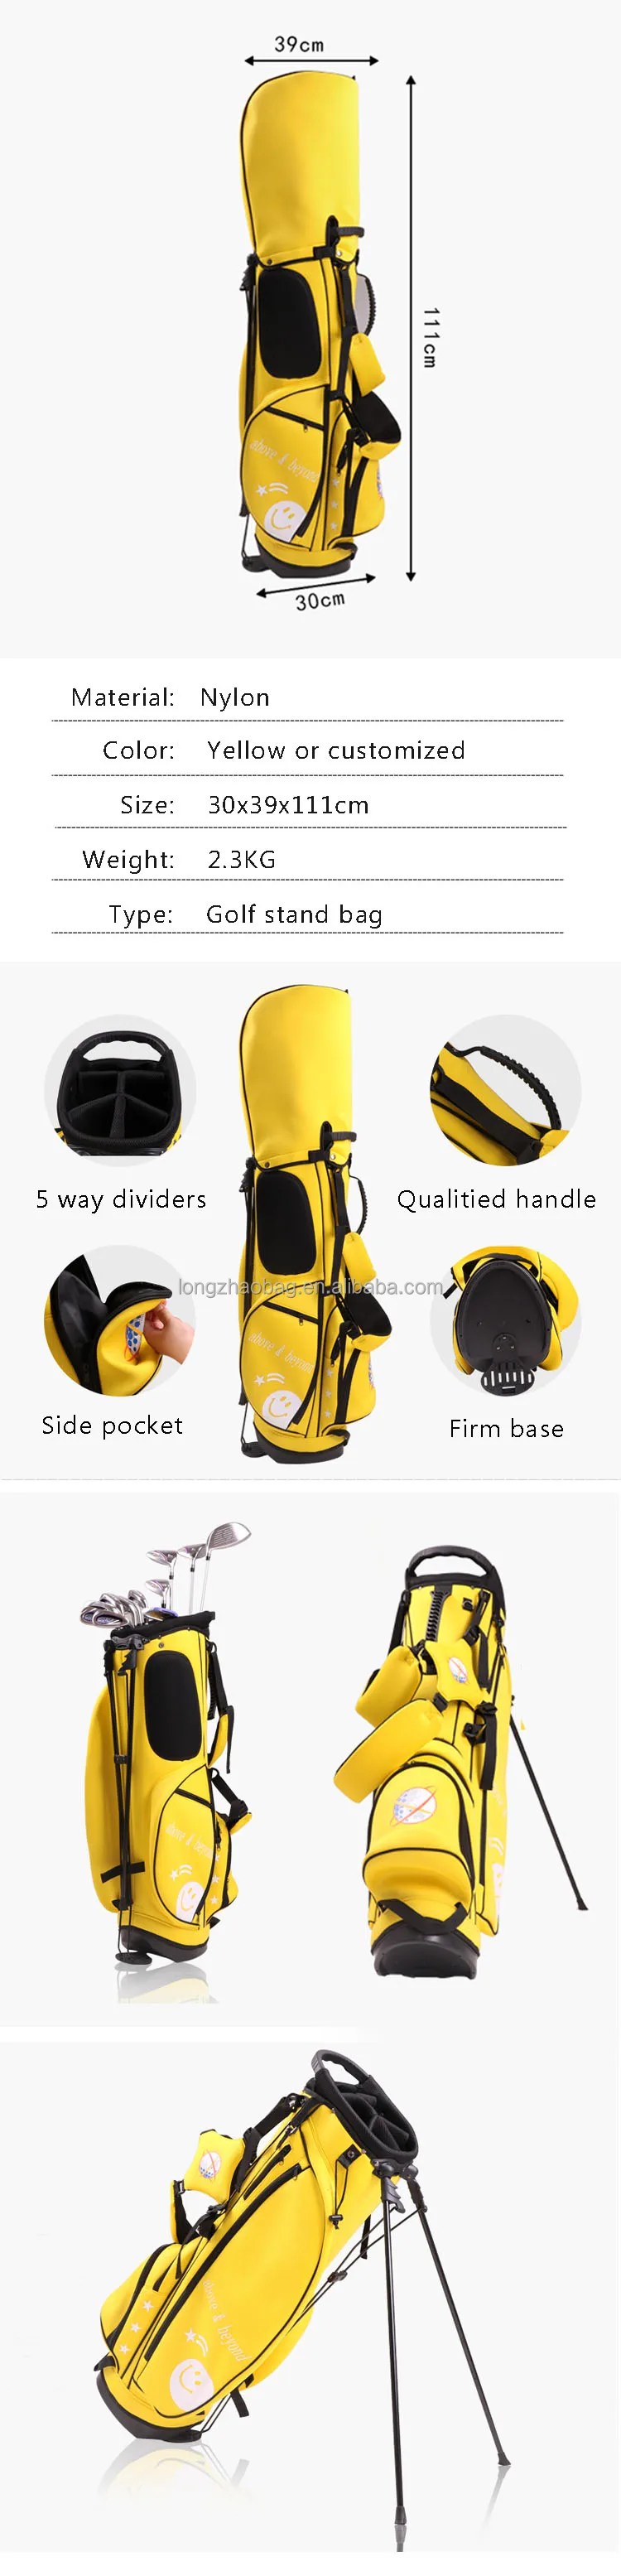 Custom golf bag1.jpg